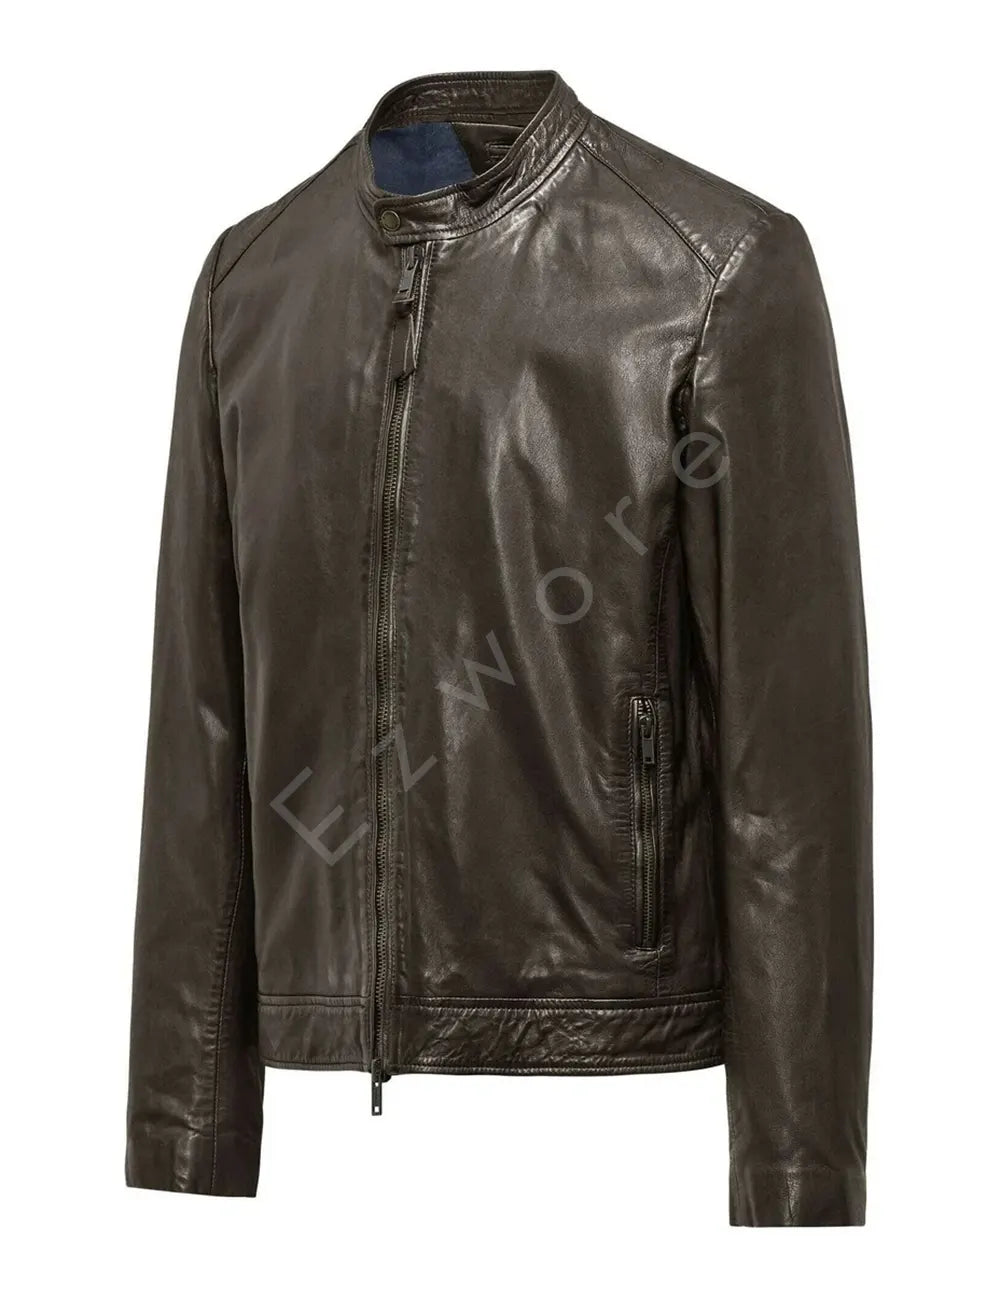 Dark Brown Leather Jacket For Men